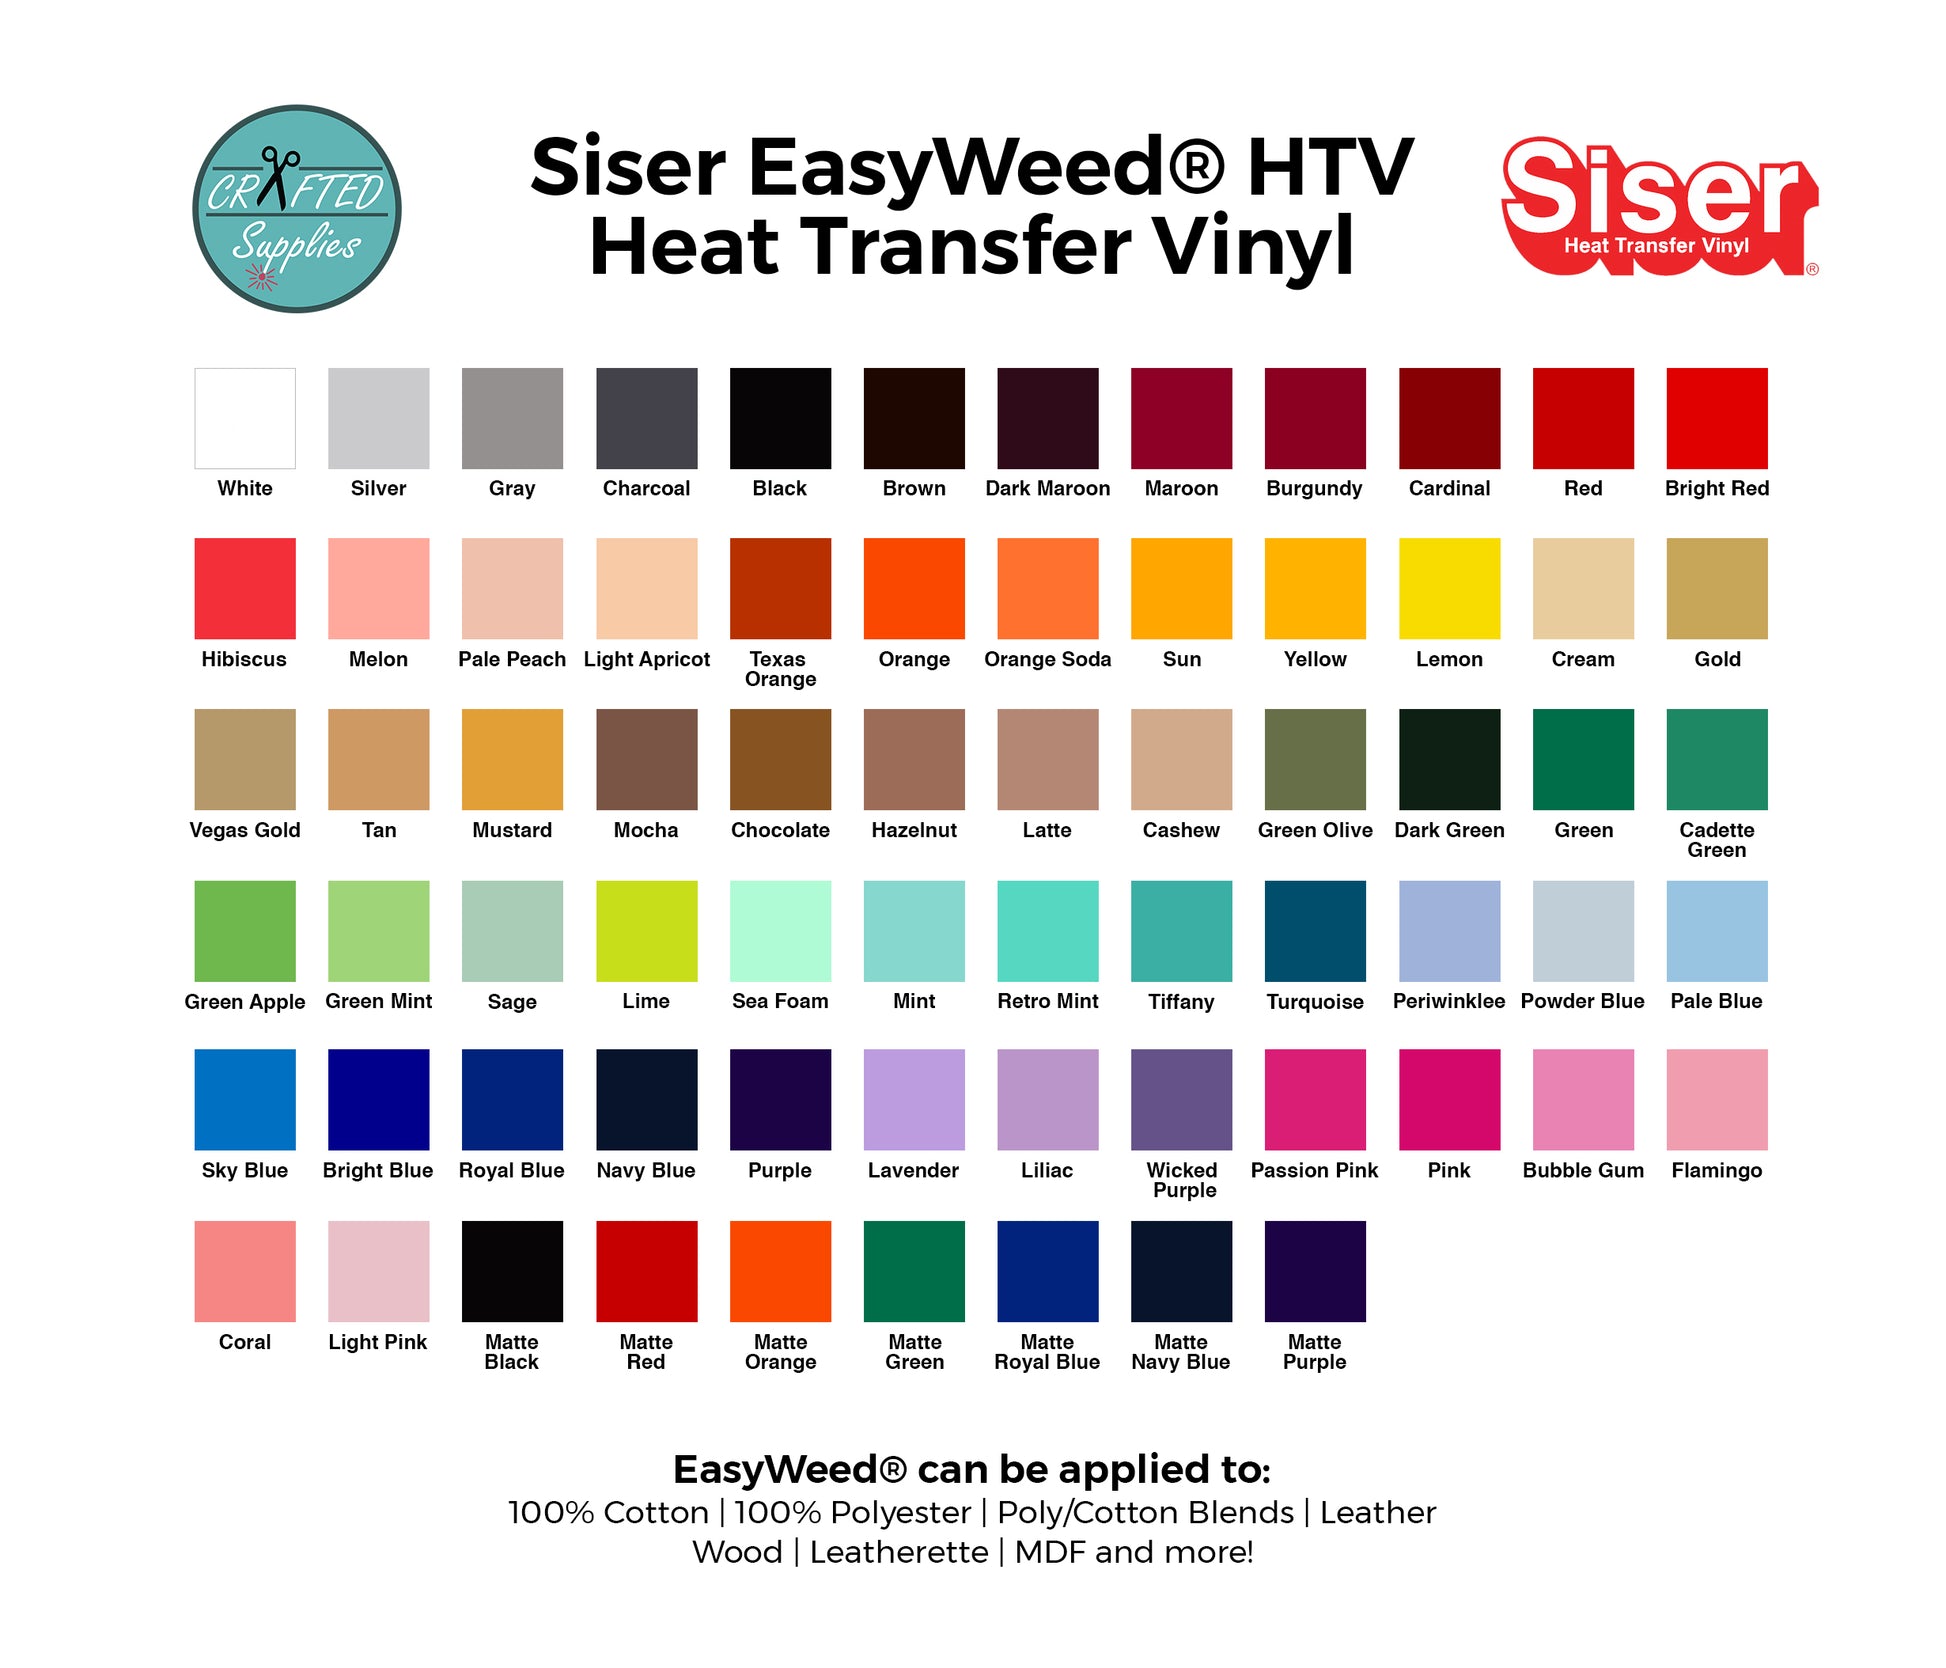 Siser EasyWeed 15” Matte Royal Blue Heat Transfer Vinyl